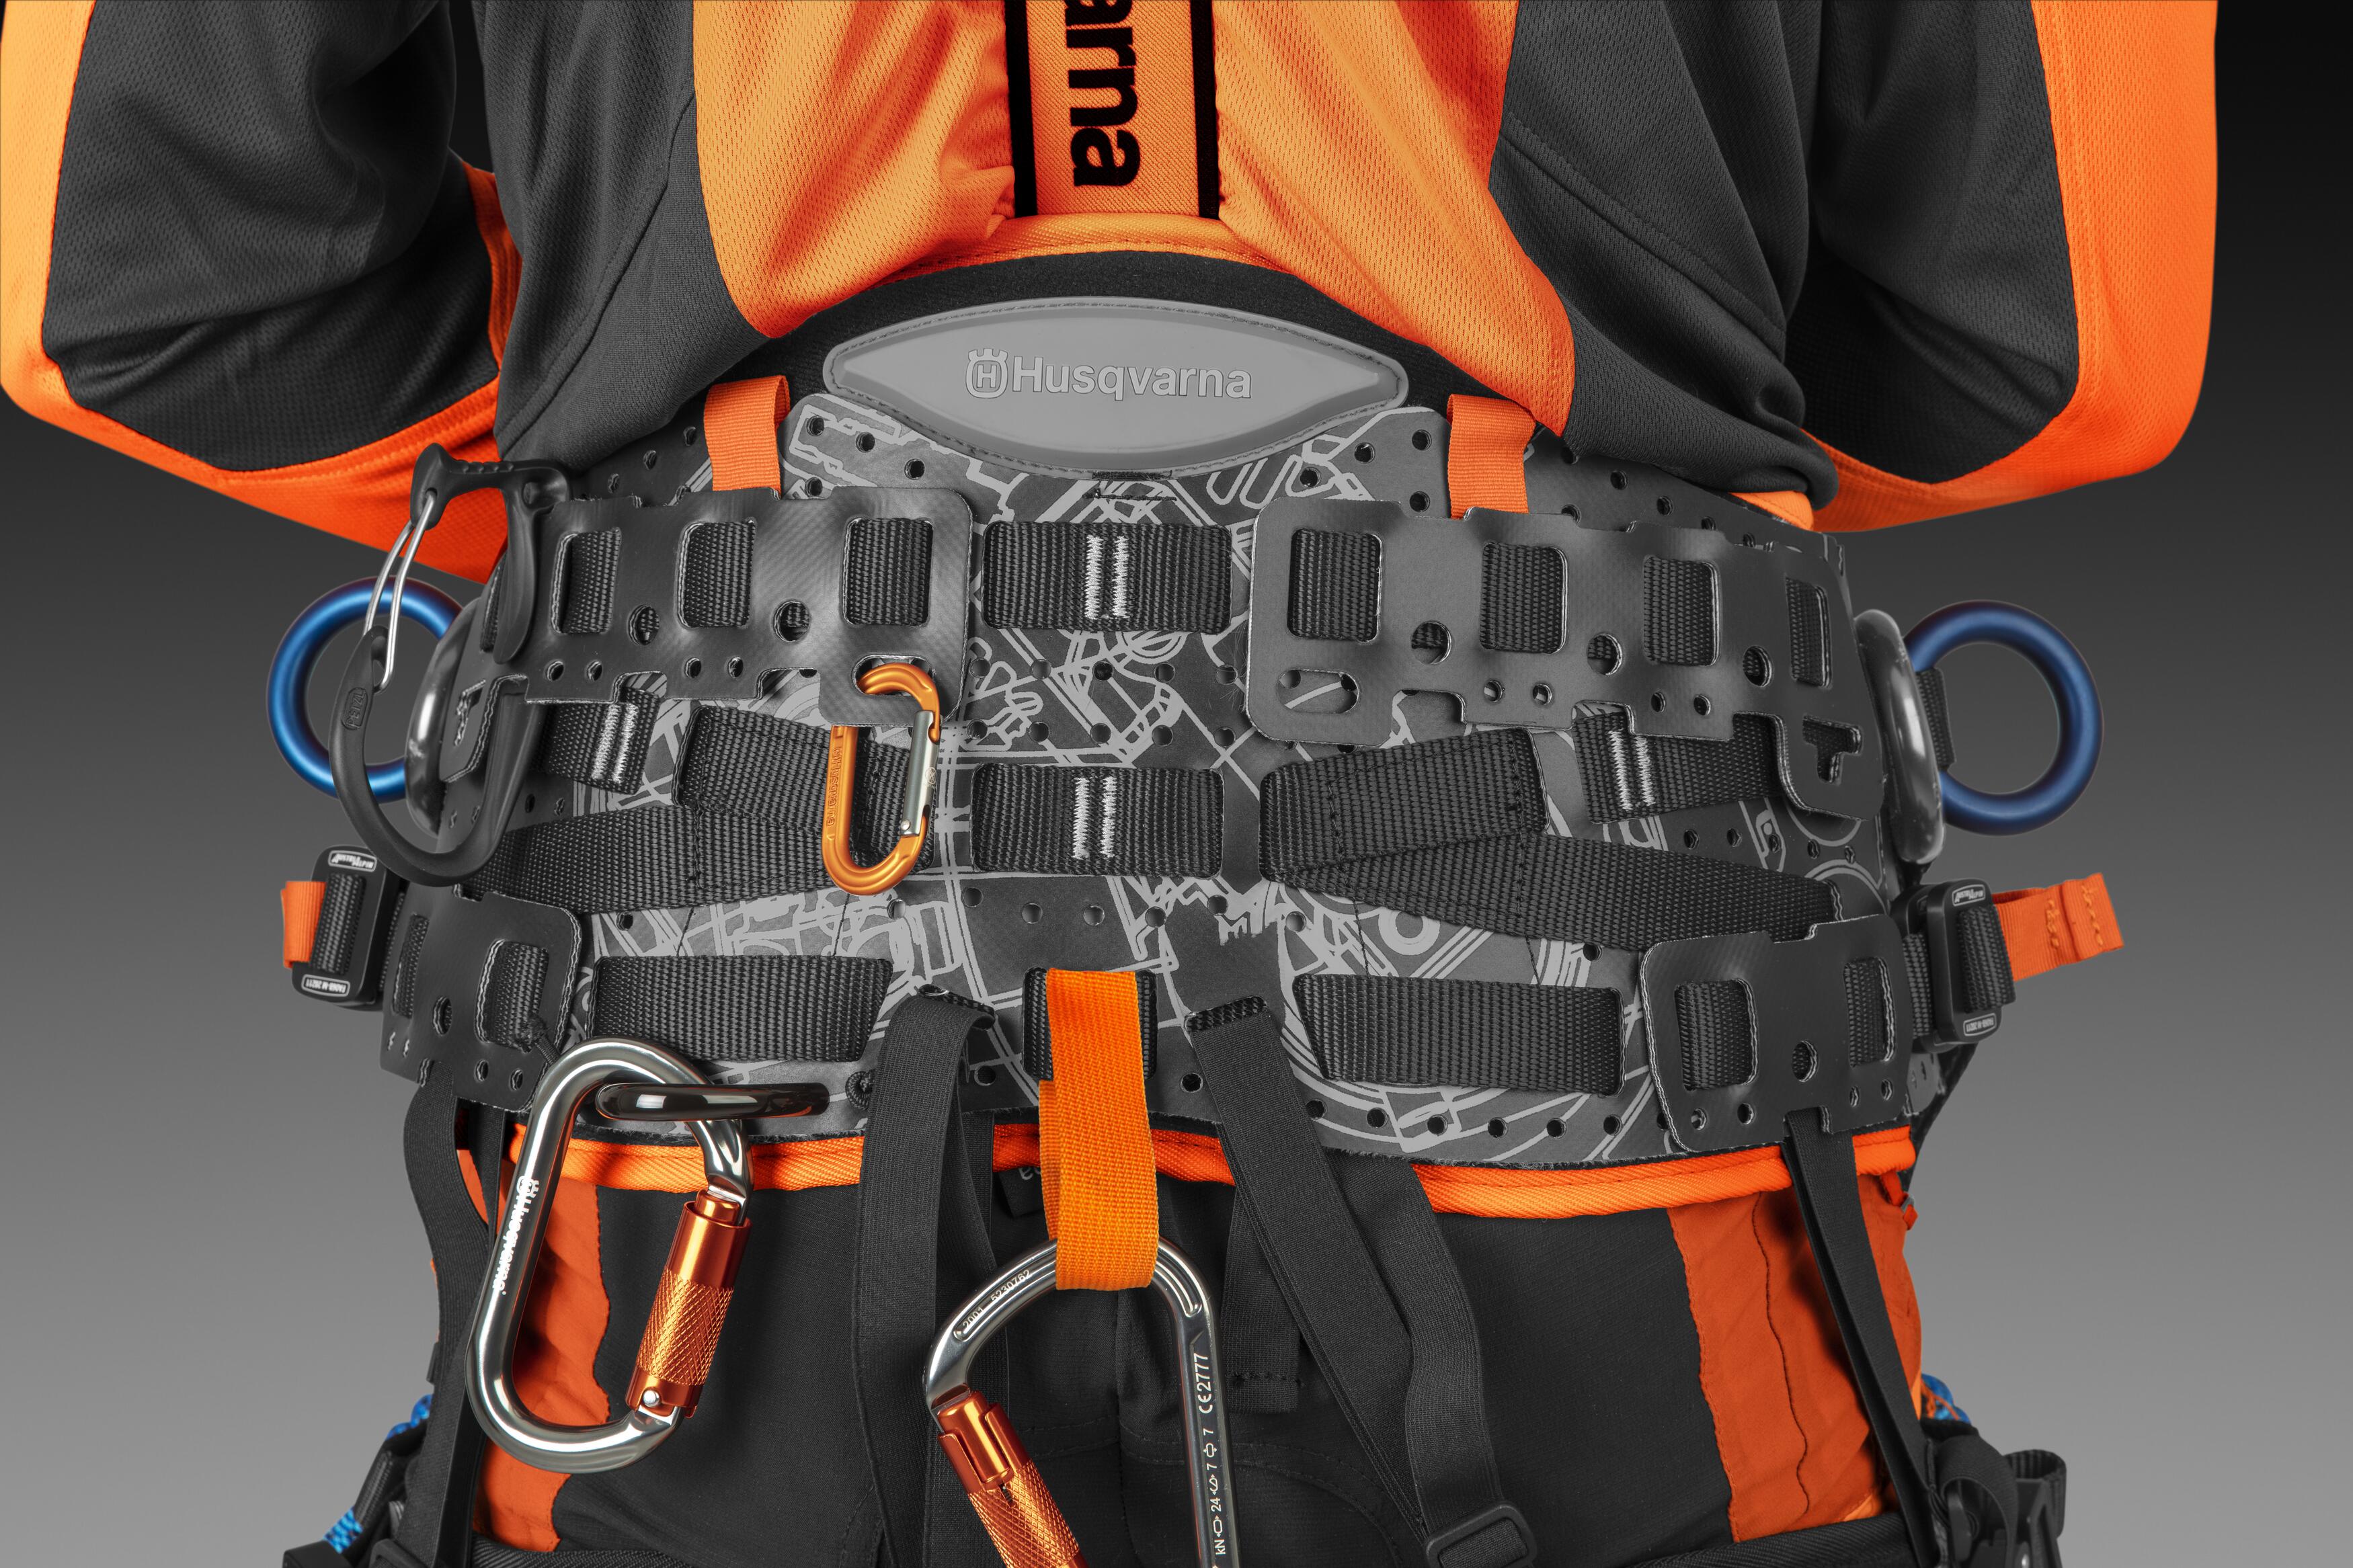 Climbing harness, Gear attachment points